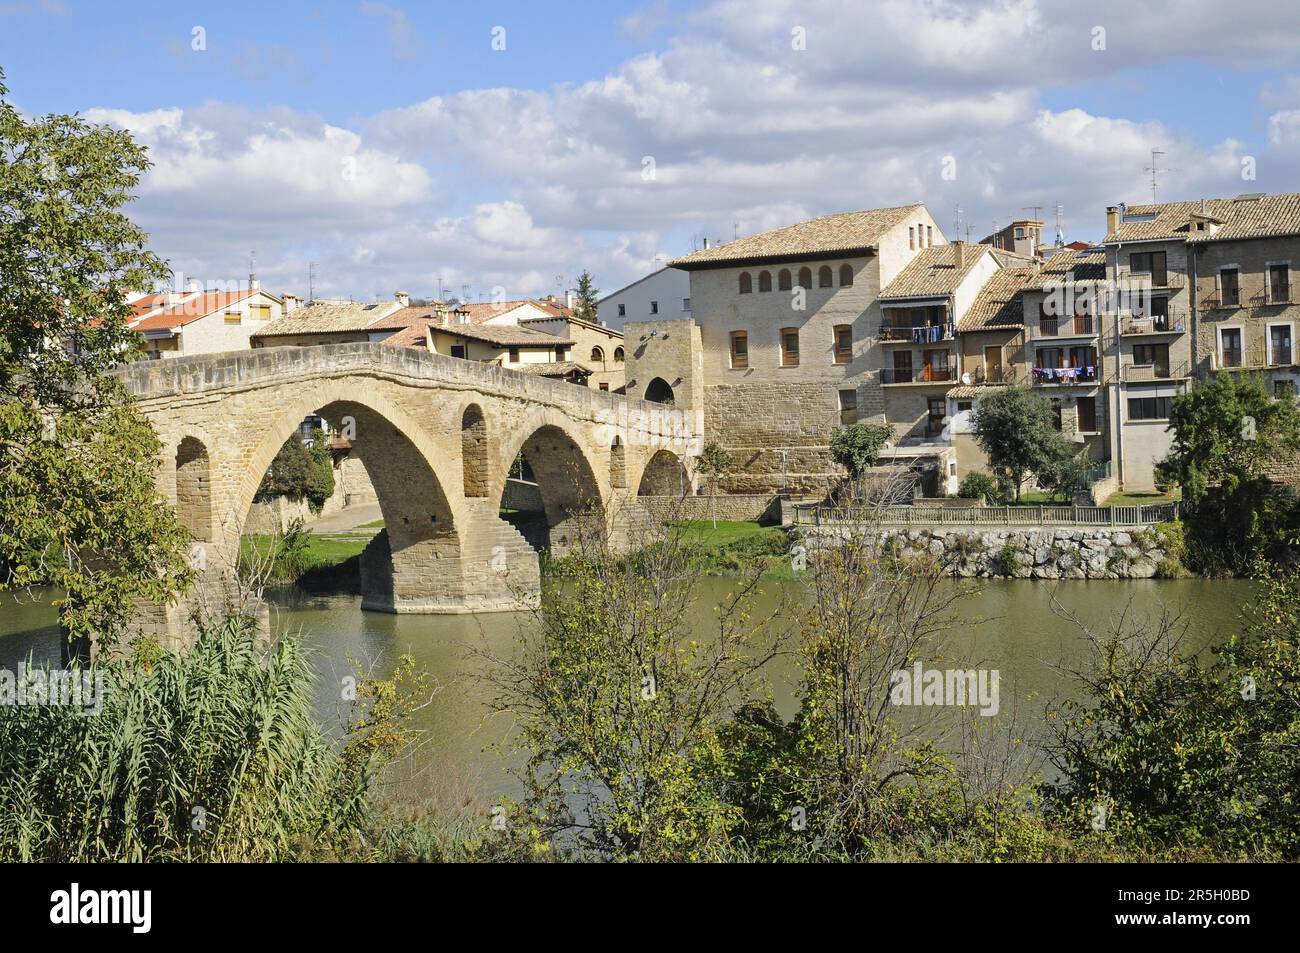 Puente Romanica, River Arga, Way of St. James, Puente la Reina, Navarre, Spain, Roman Bridge Stock Photo